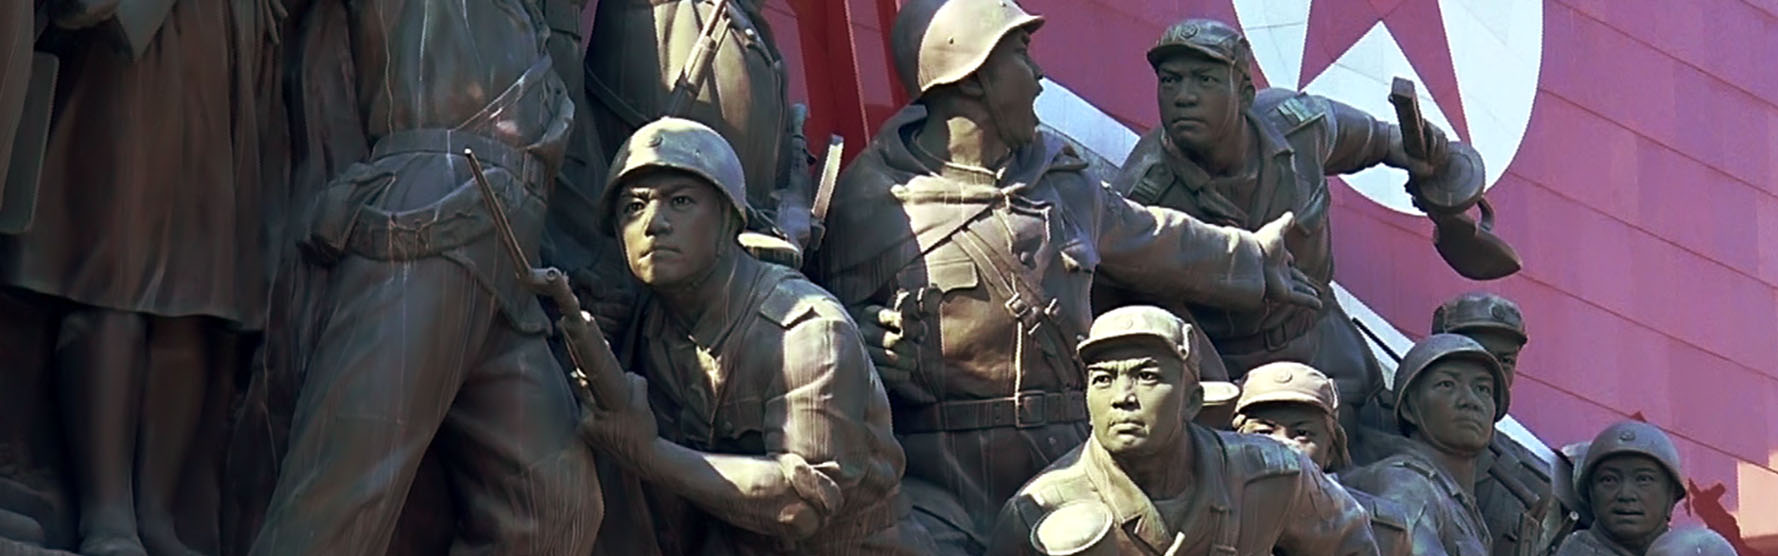 Kim Jong Un: The Man Who Rules North Korea